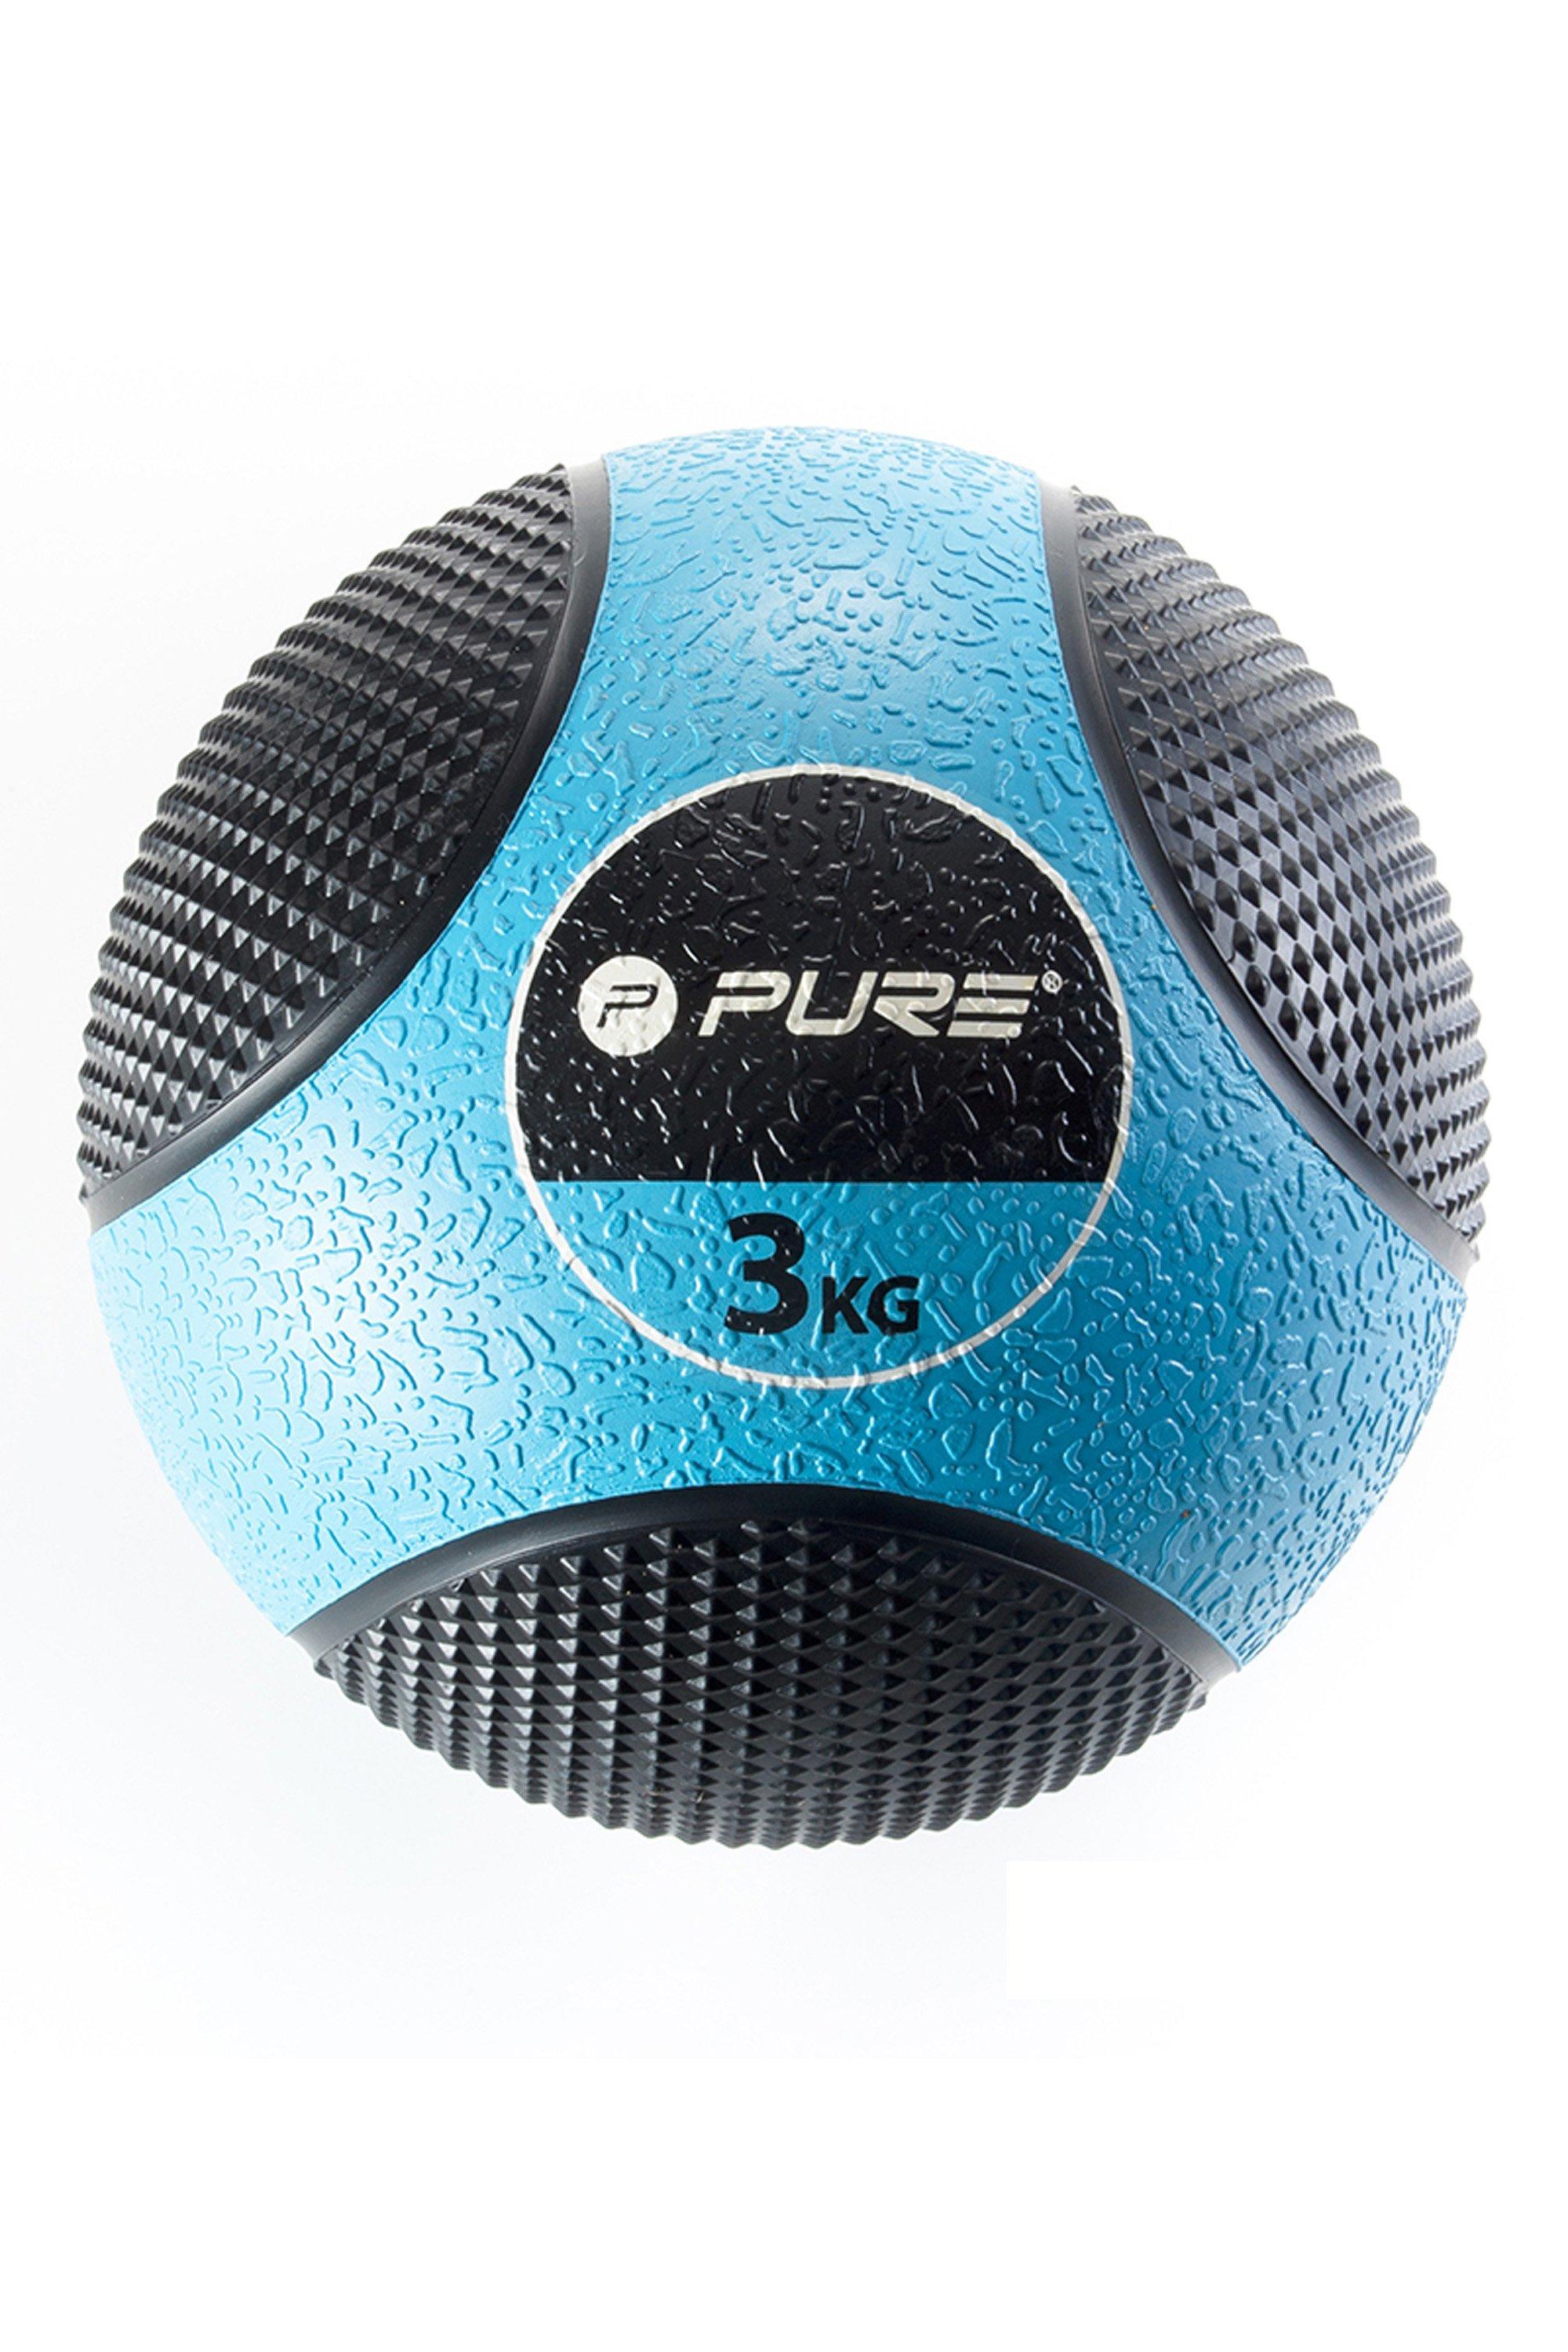 Pure2Improve Deluxe Medicine Ball 3Kg - Light Blue/Black|